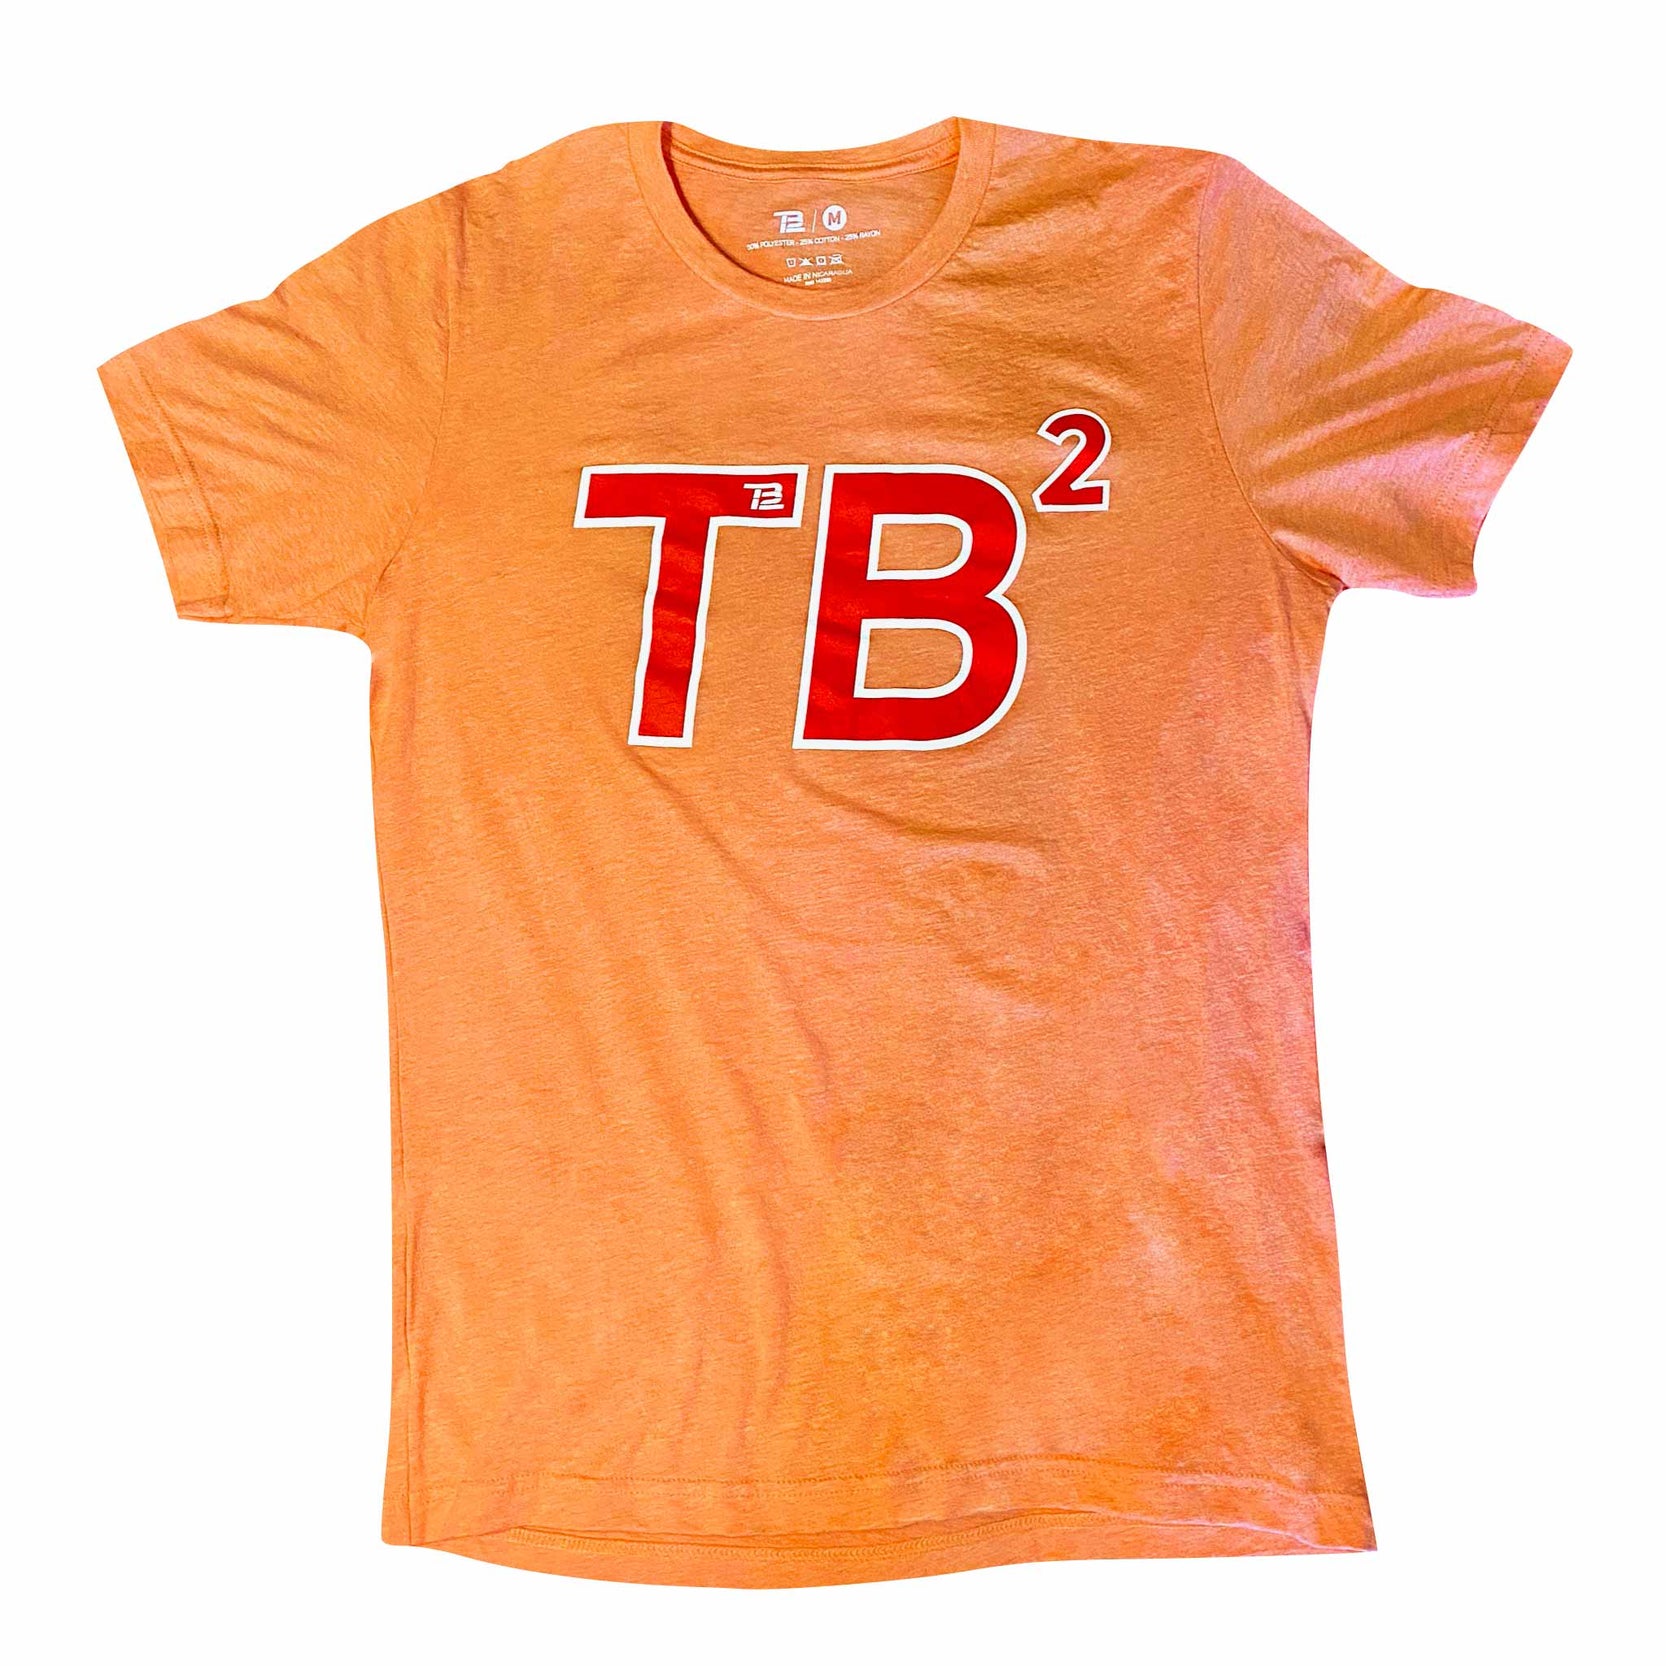 tb12 jersey